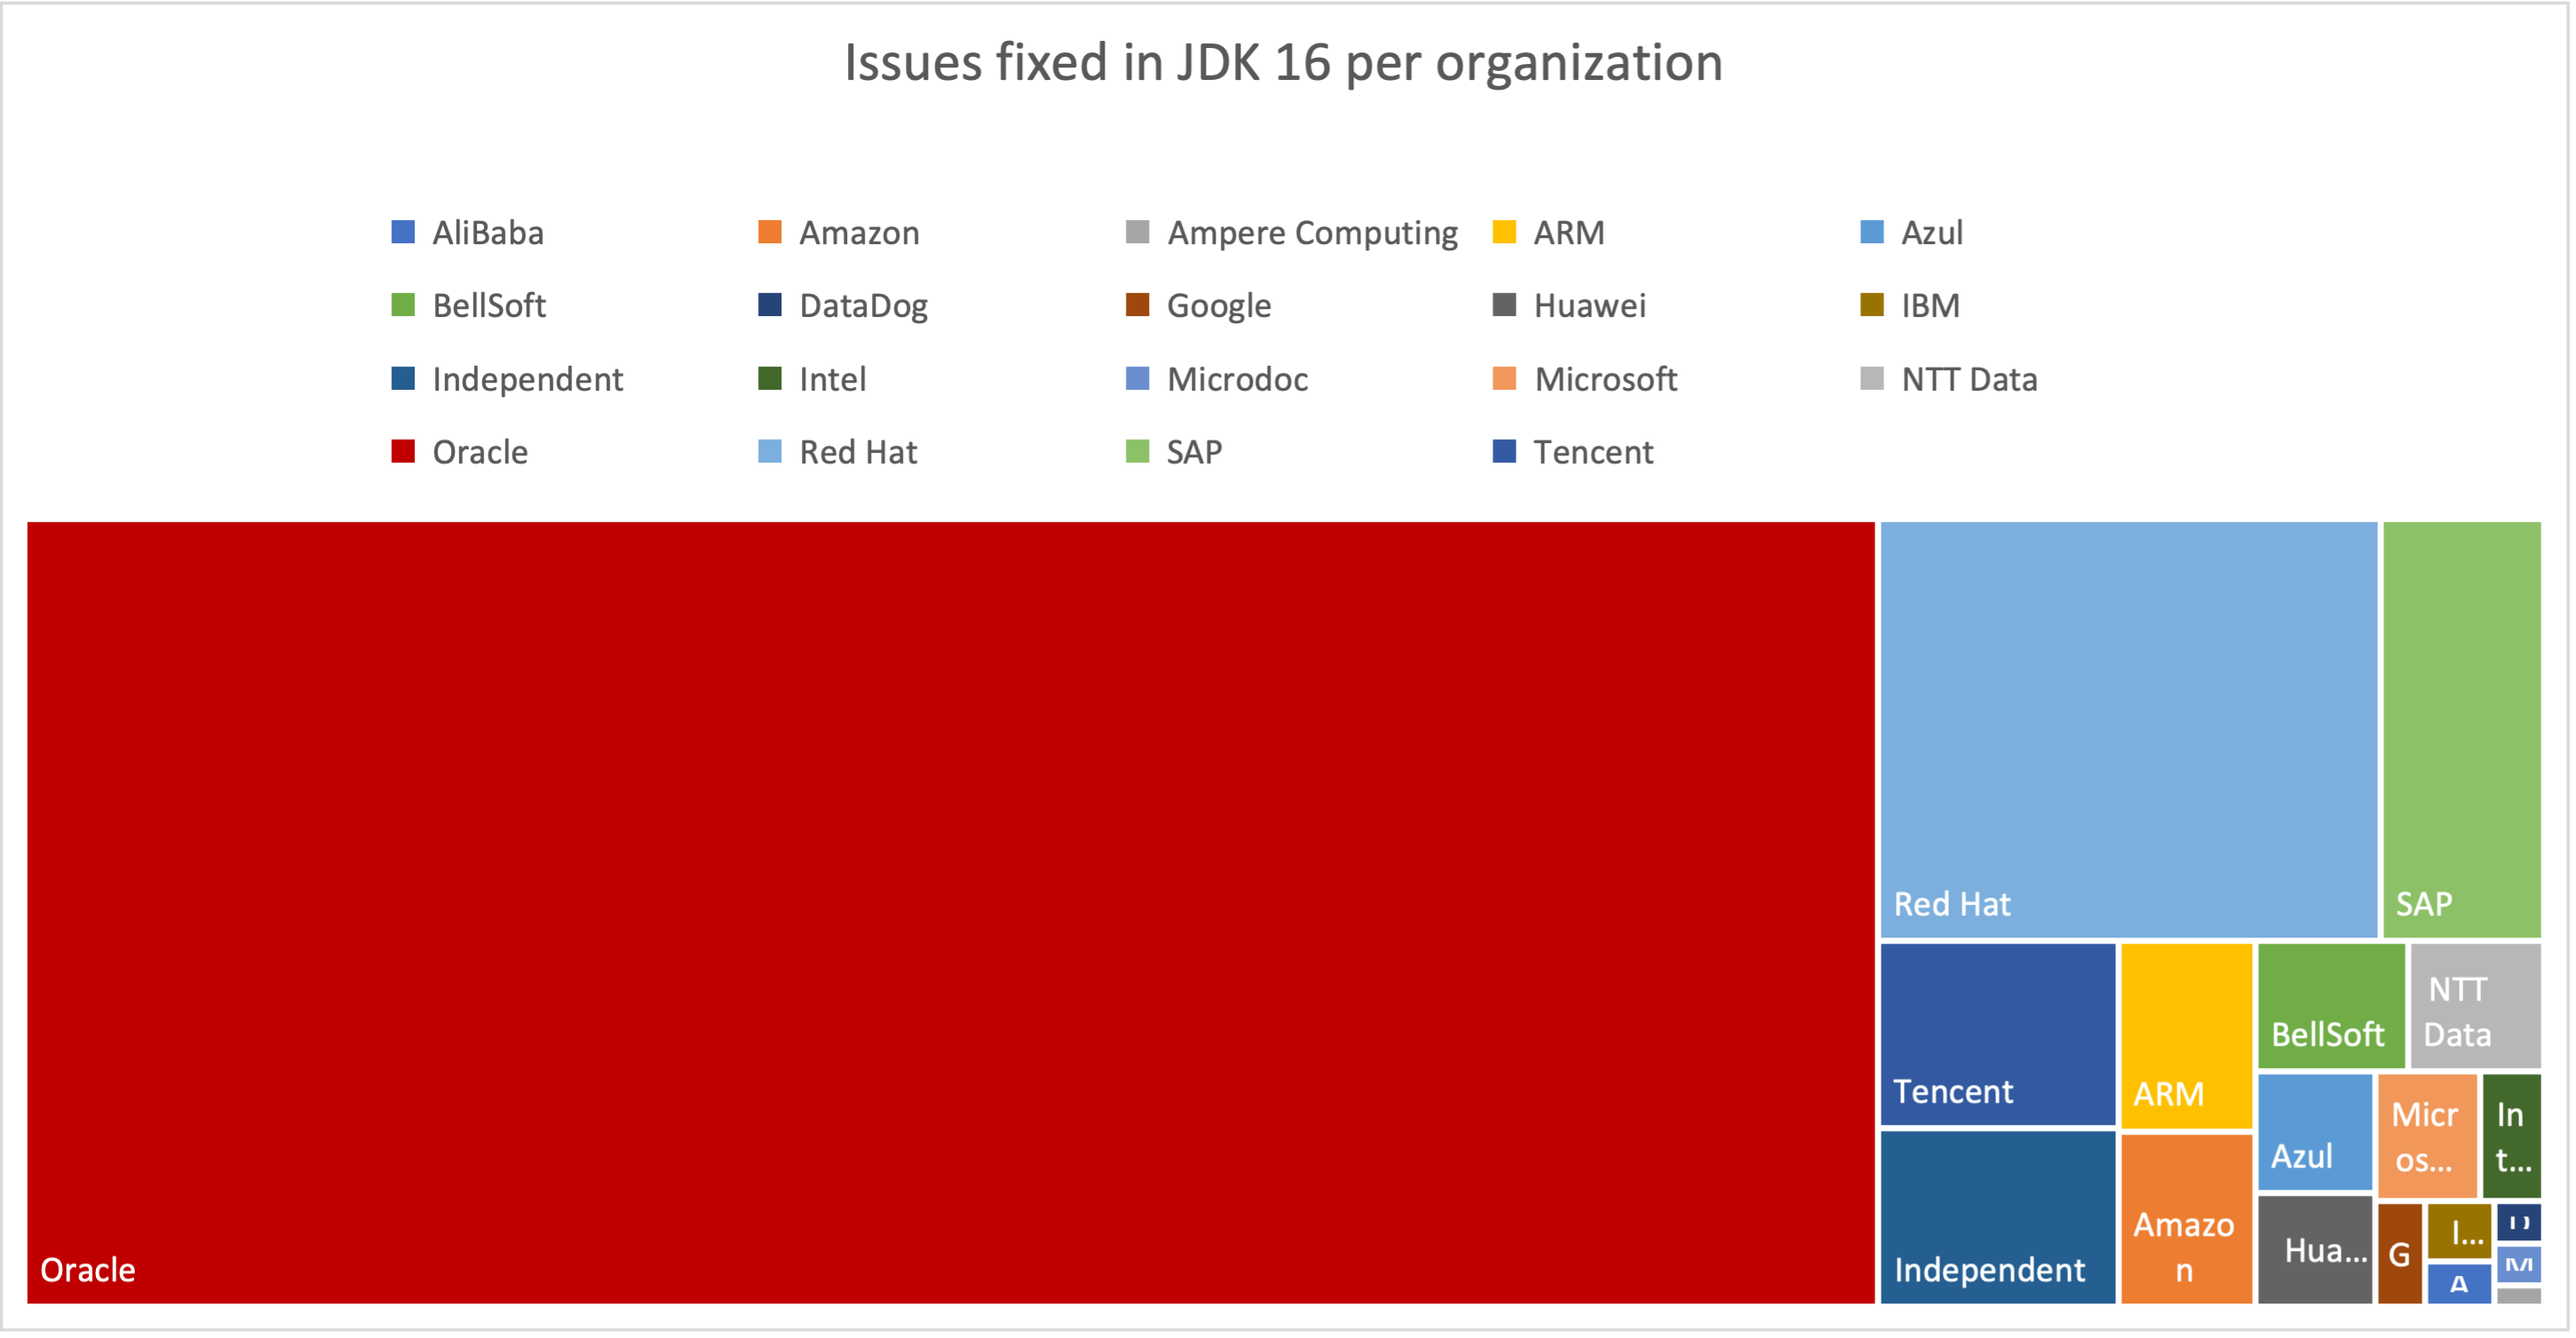 除了 Oracle，谁为 JDK 16 修复最多 issue？